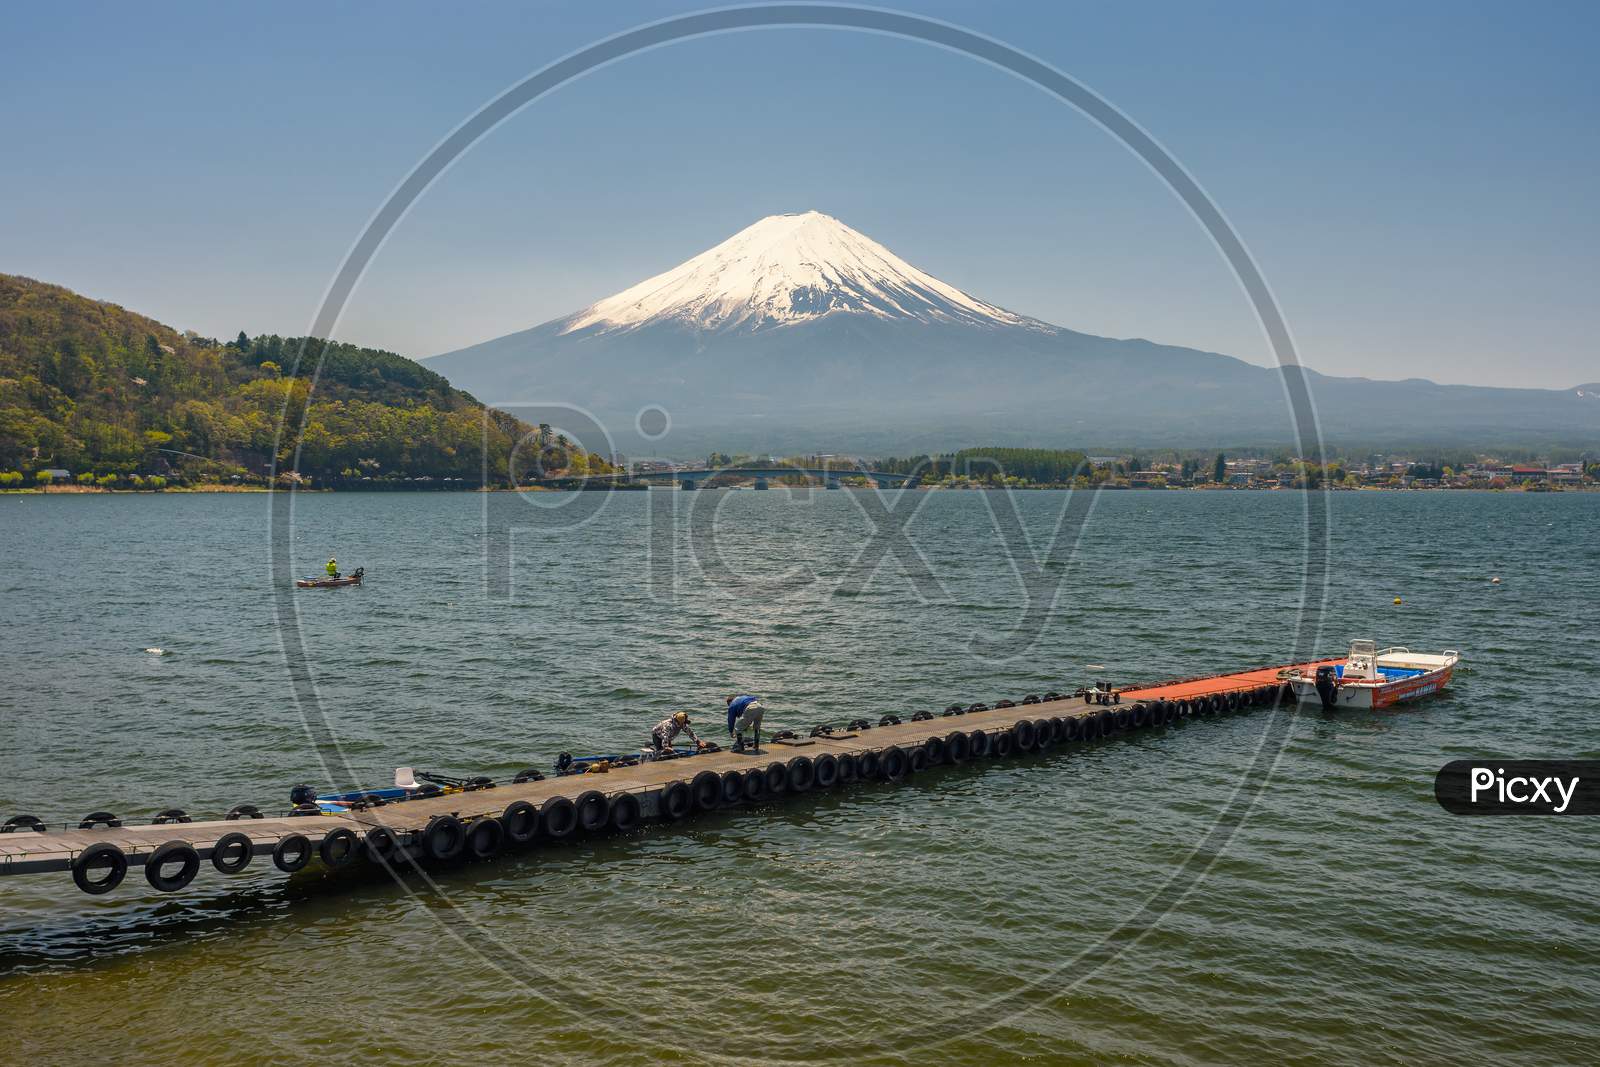 Scenic View Of Mount Fuji And Lake Kawaguchi (Kawaguchiko) In Japan